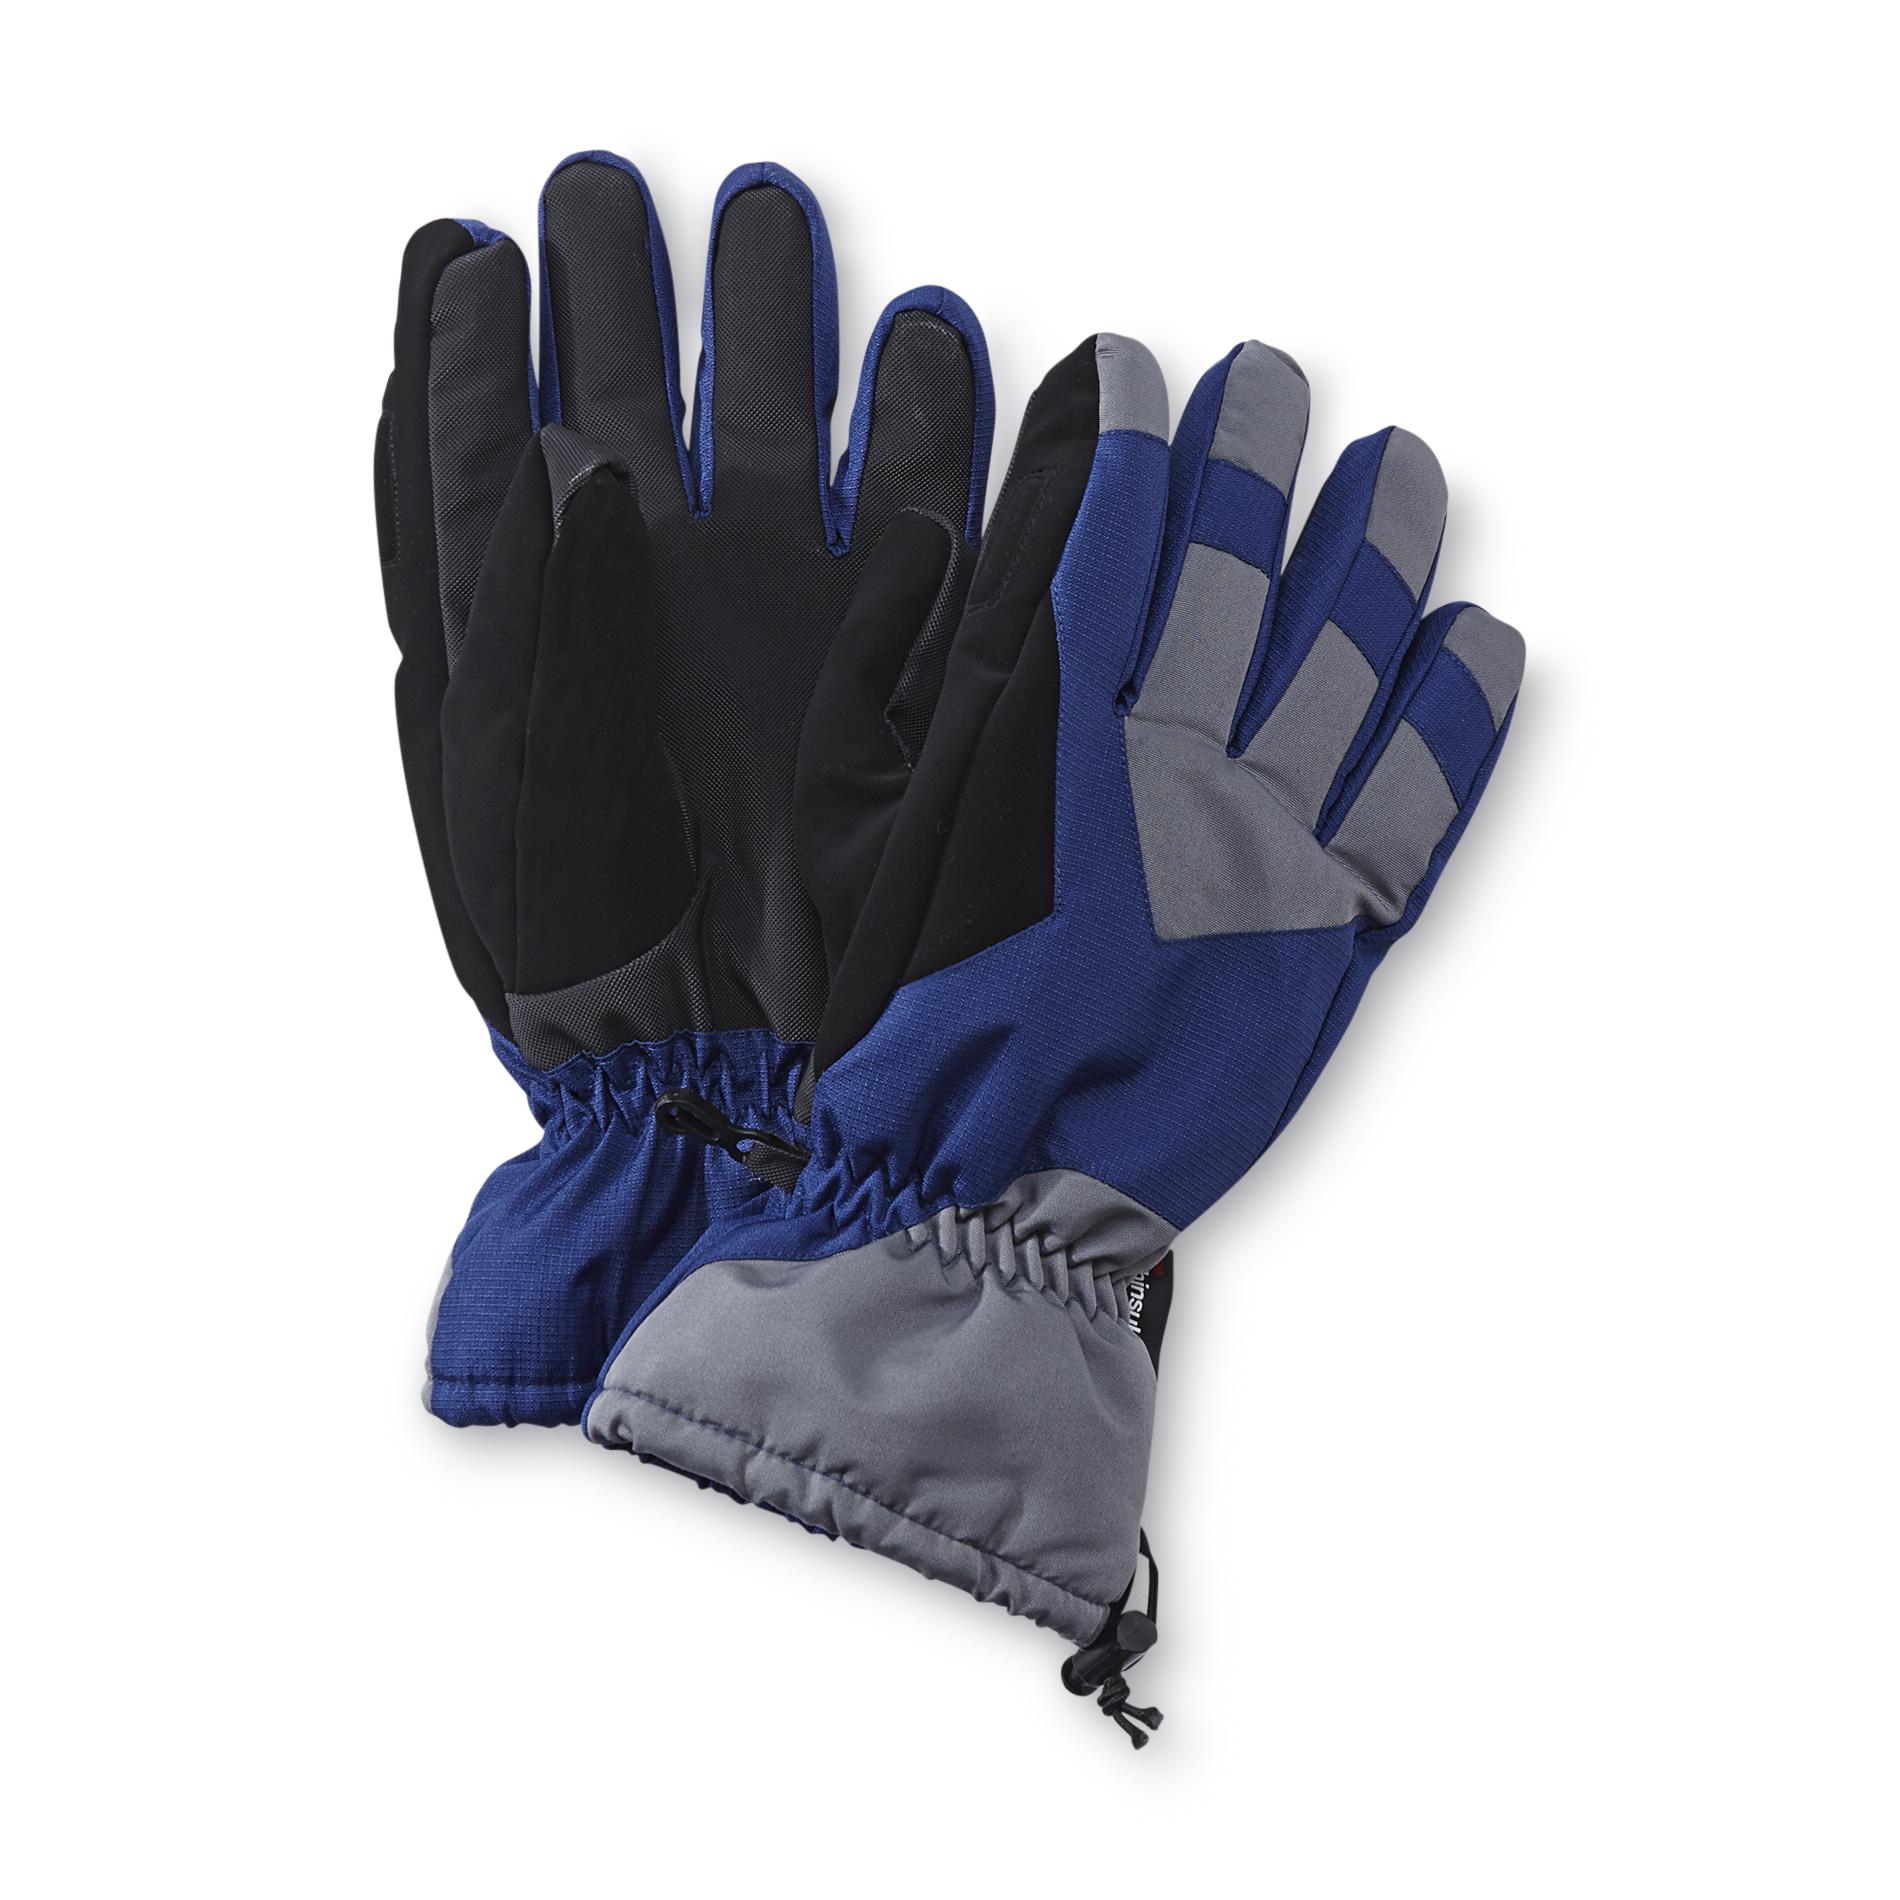 NordicTrack Men's Ski Gloves